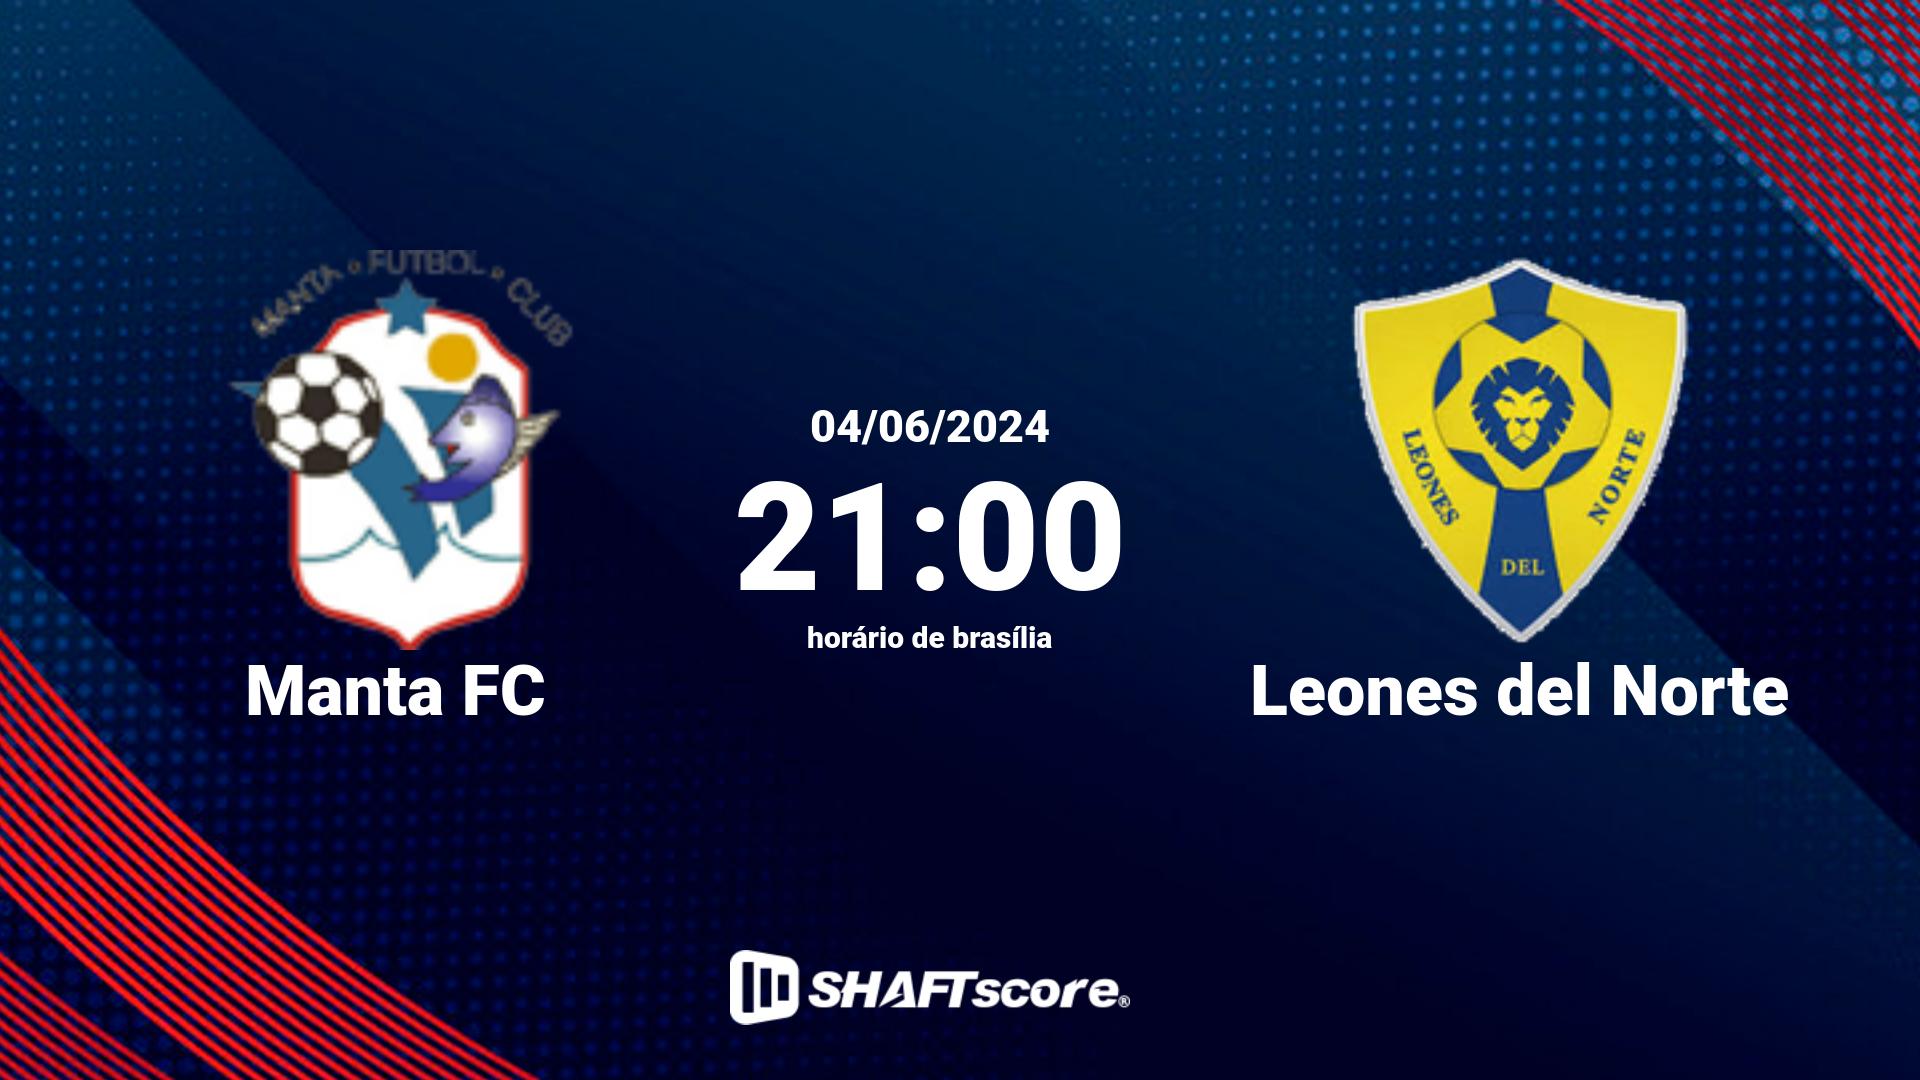 Estatísticas do jogo Manta FC vs Leones del Norte 04.06 21:00